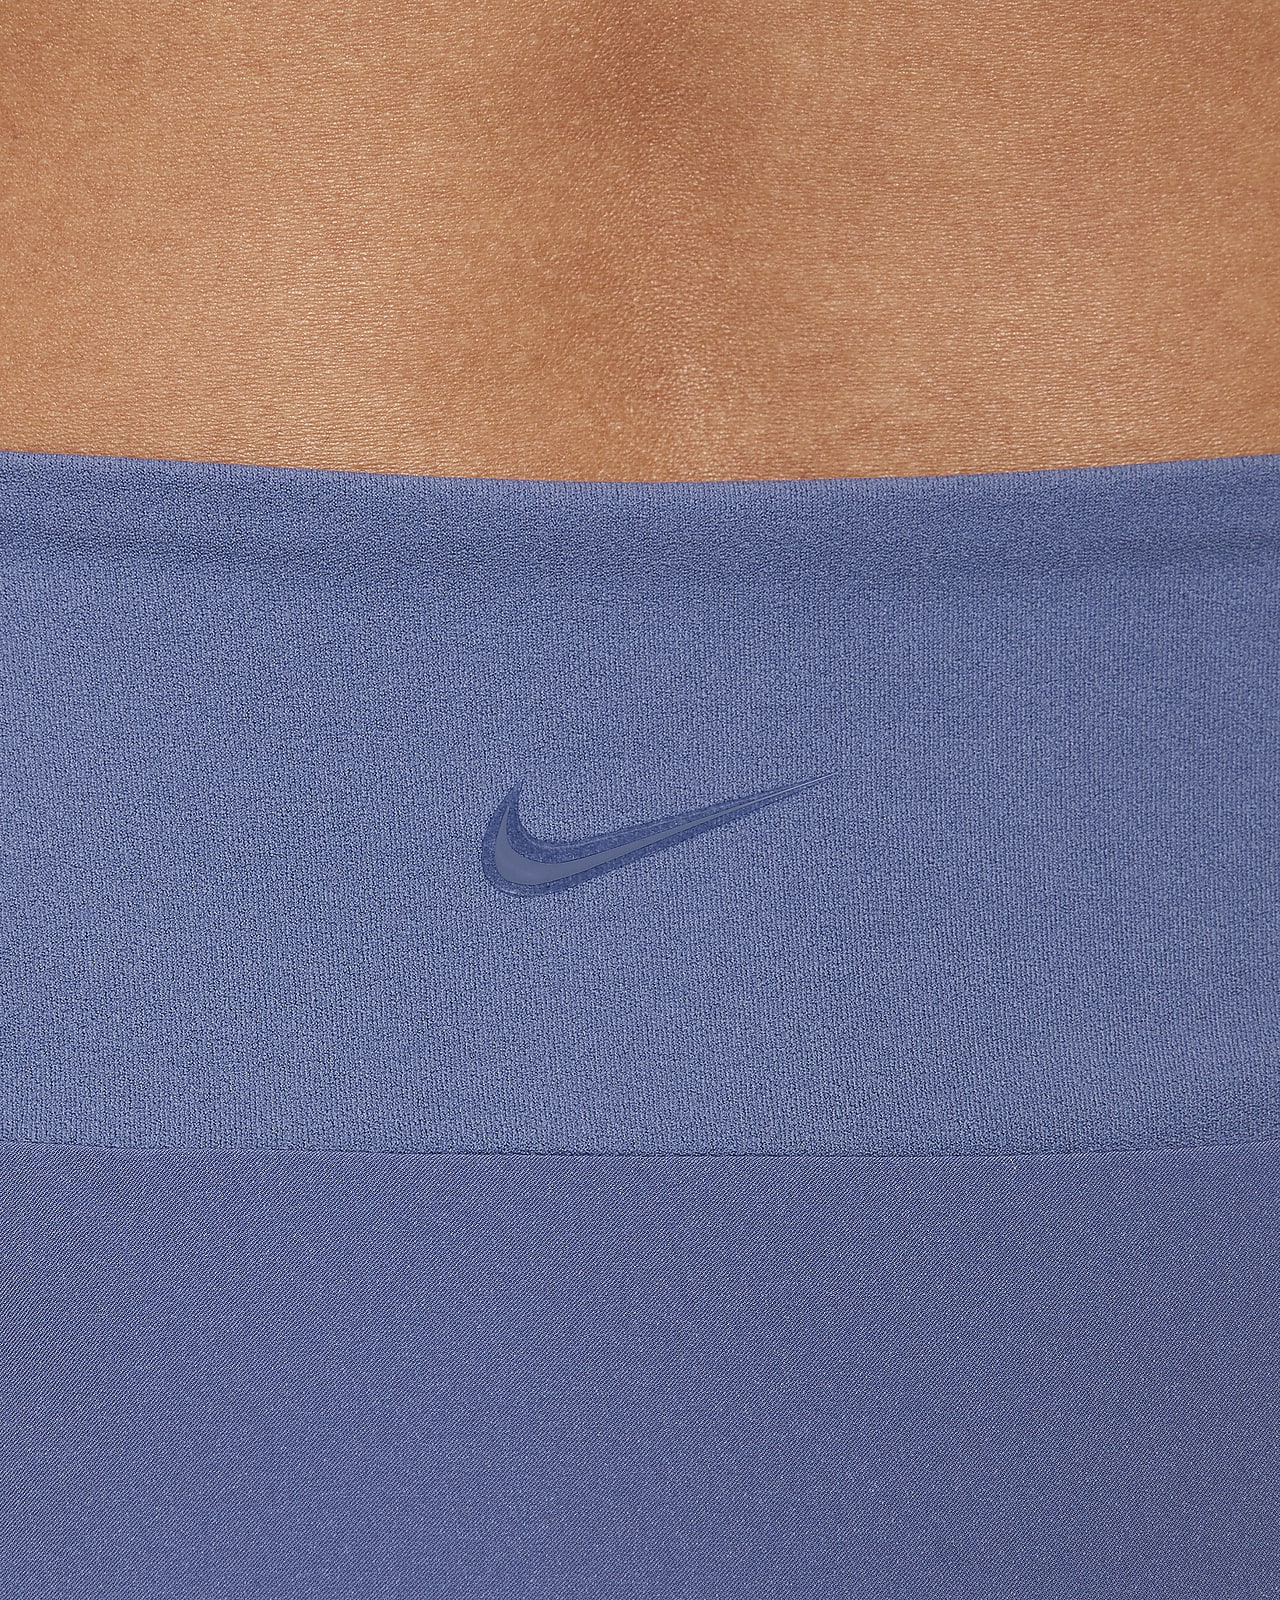 Nike - Nike Dri-Fit legend Leggings- XS on Designer Wardrobe